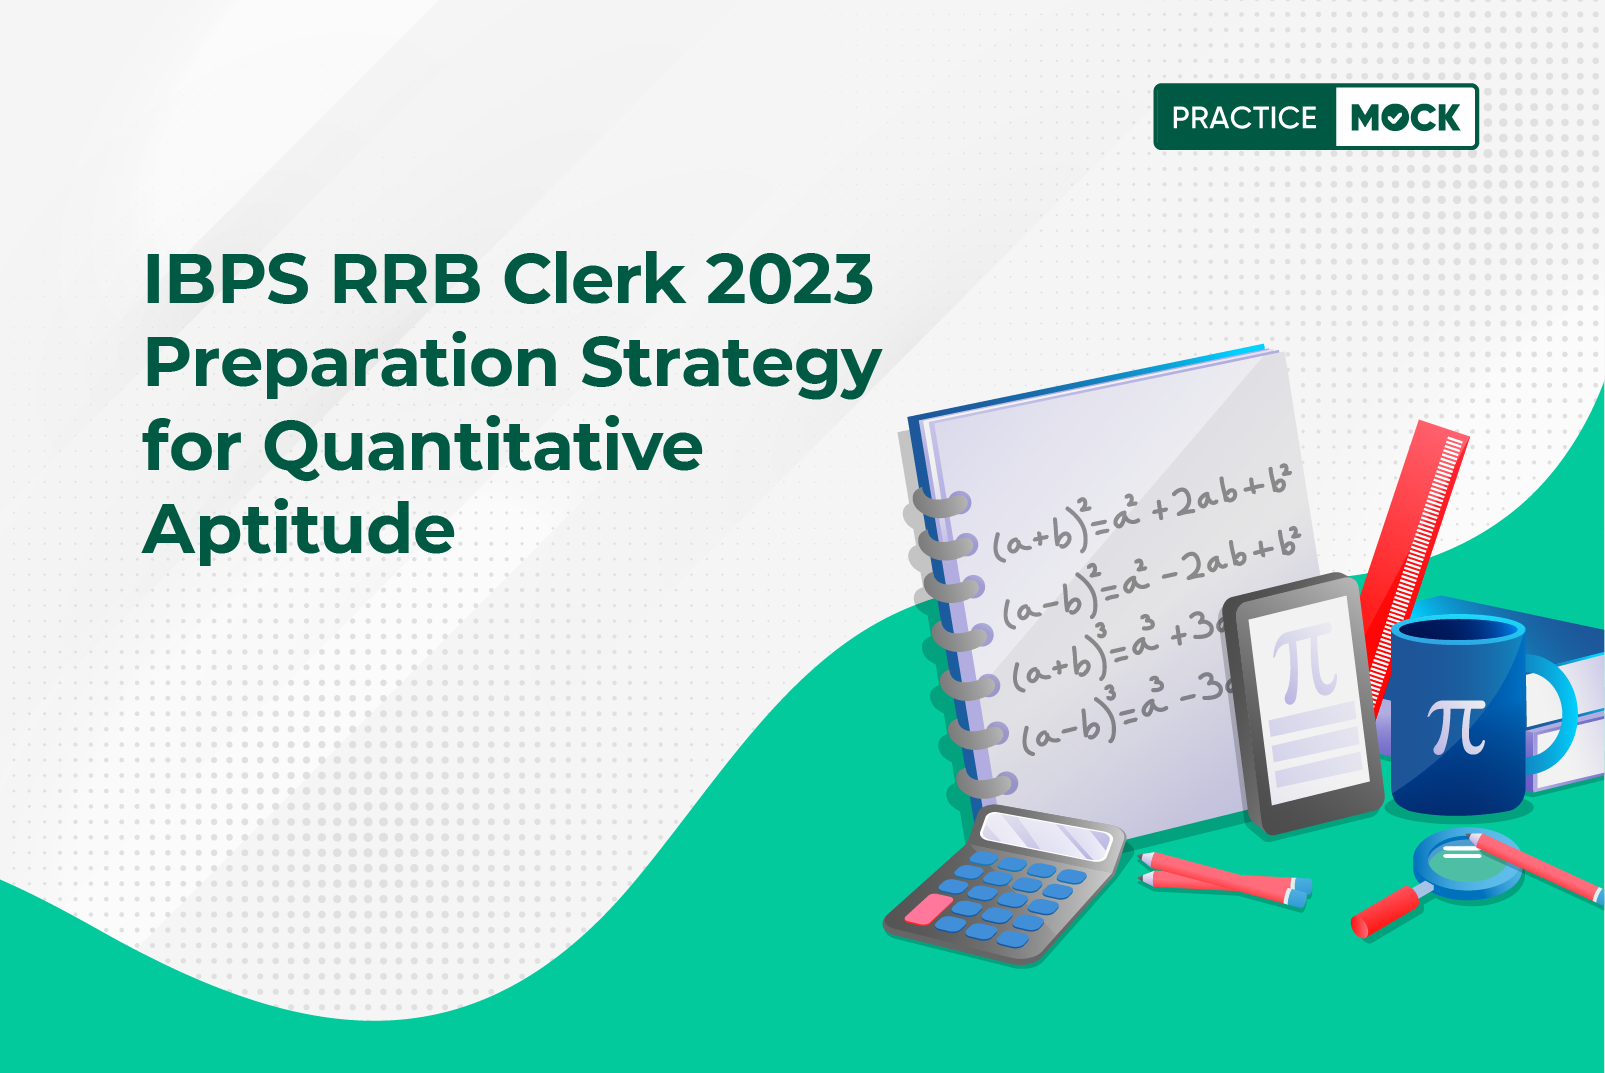 ibps-rrb-clerk-2023-preparation-strategy-for-quantitative-aptitude-practicemock